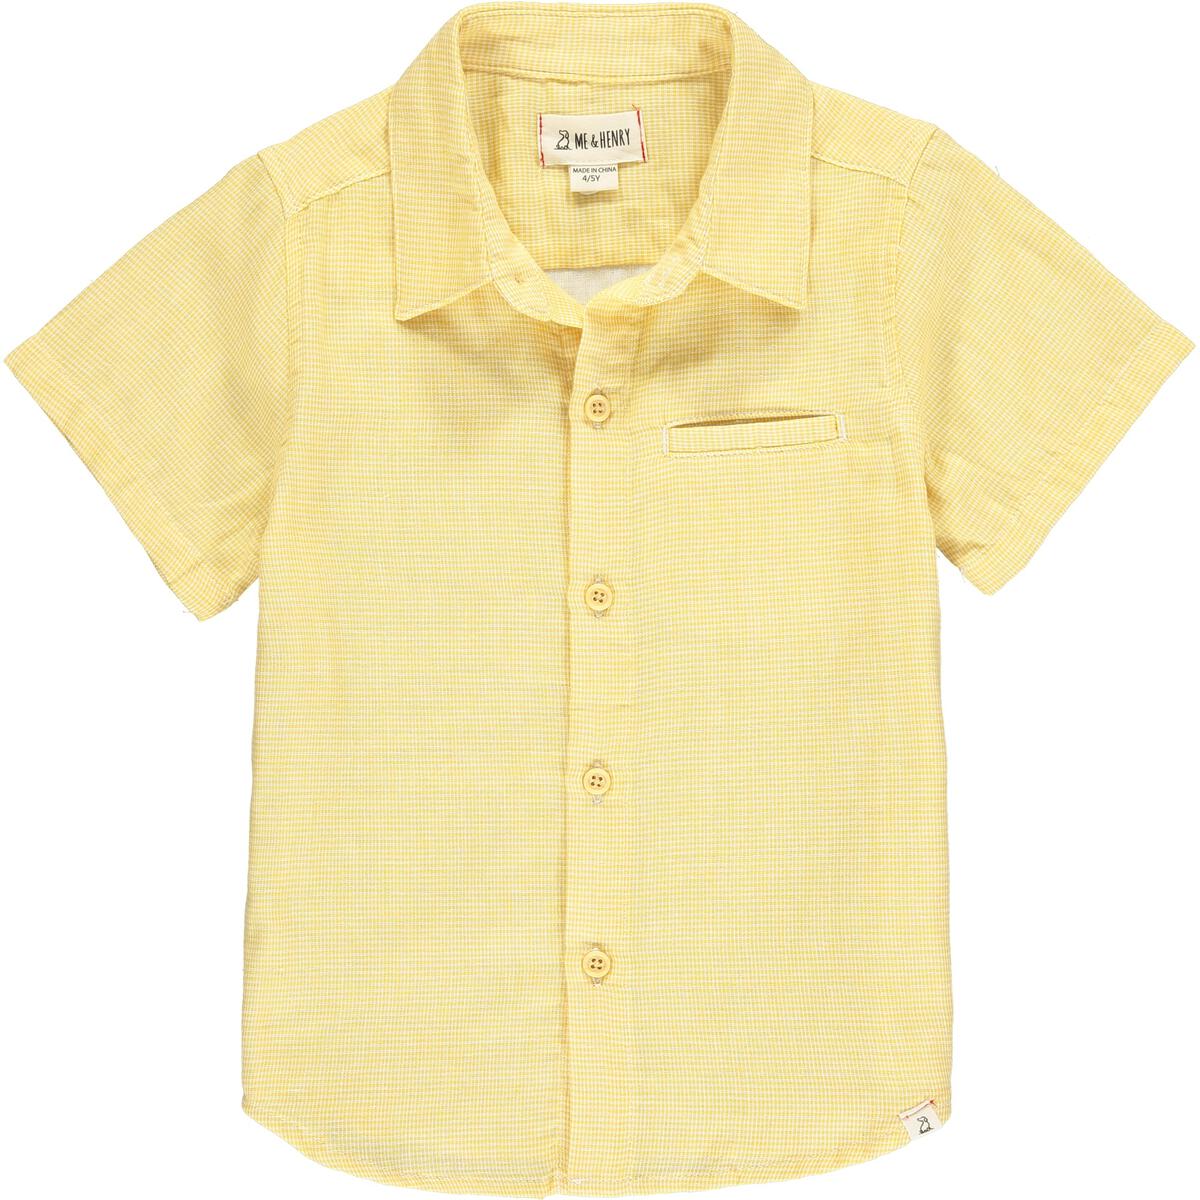 Me & Henry Gold Micro Plaid Newport Shirt-ME & HENRY-Little Giant Kidz